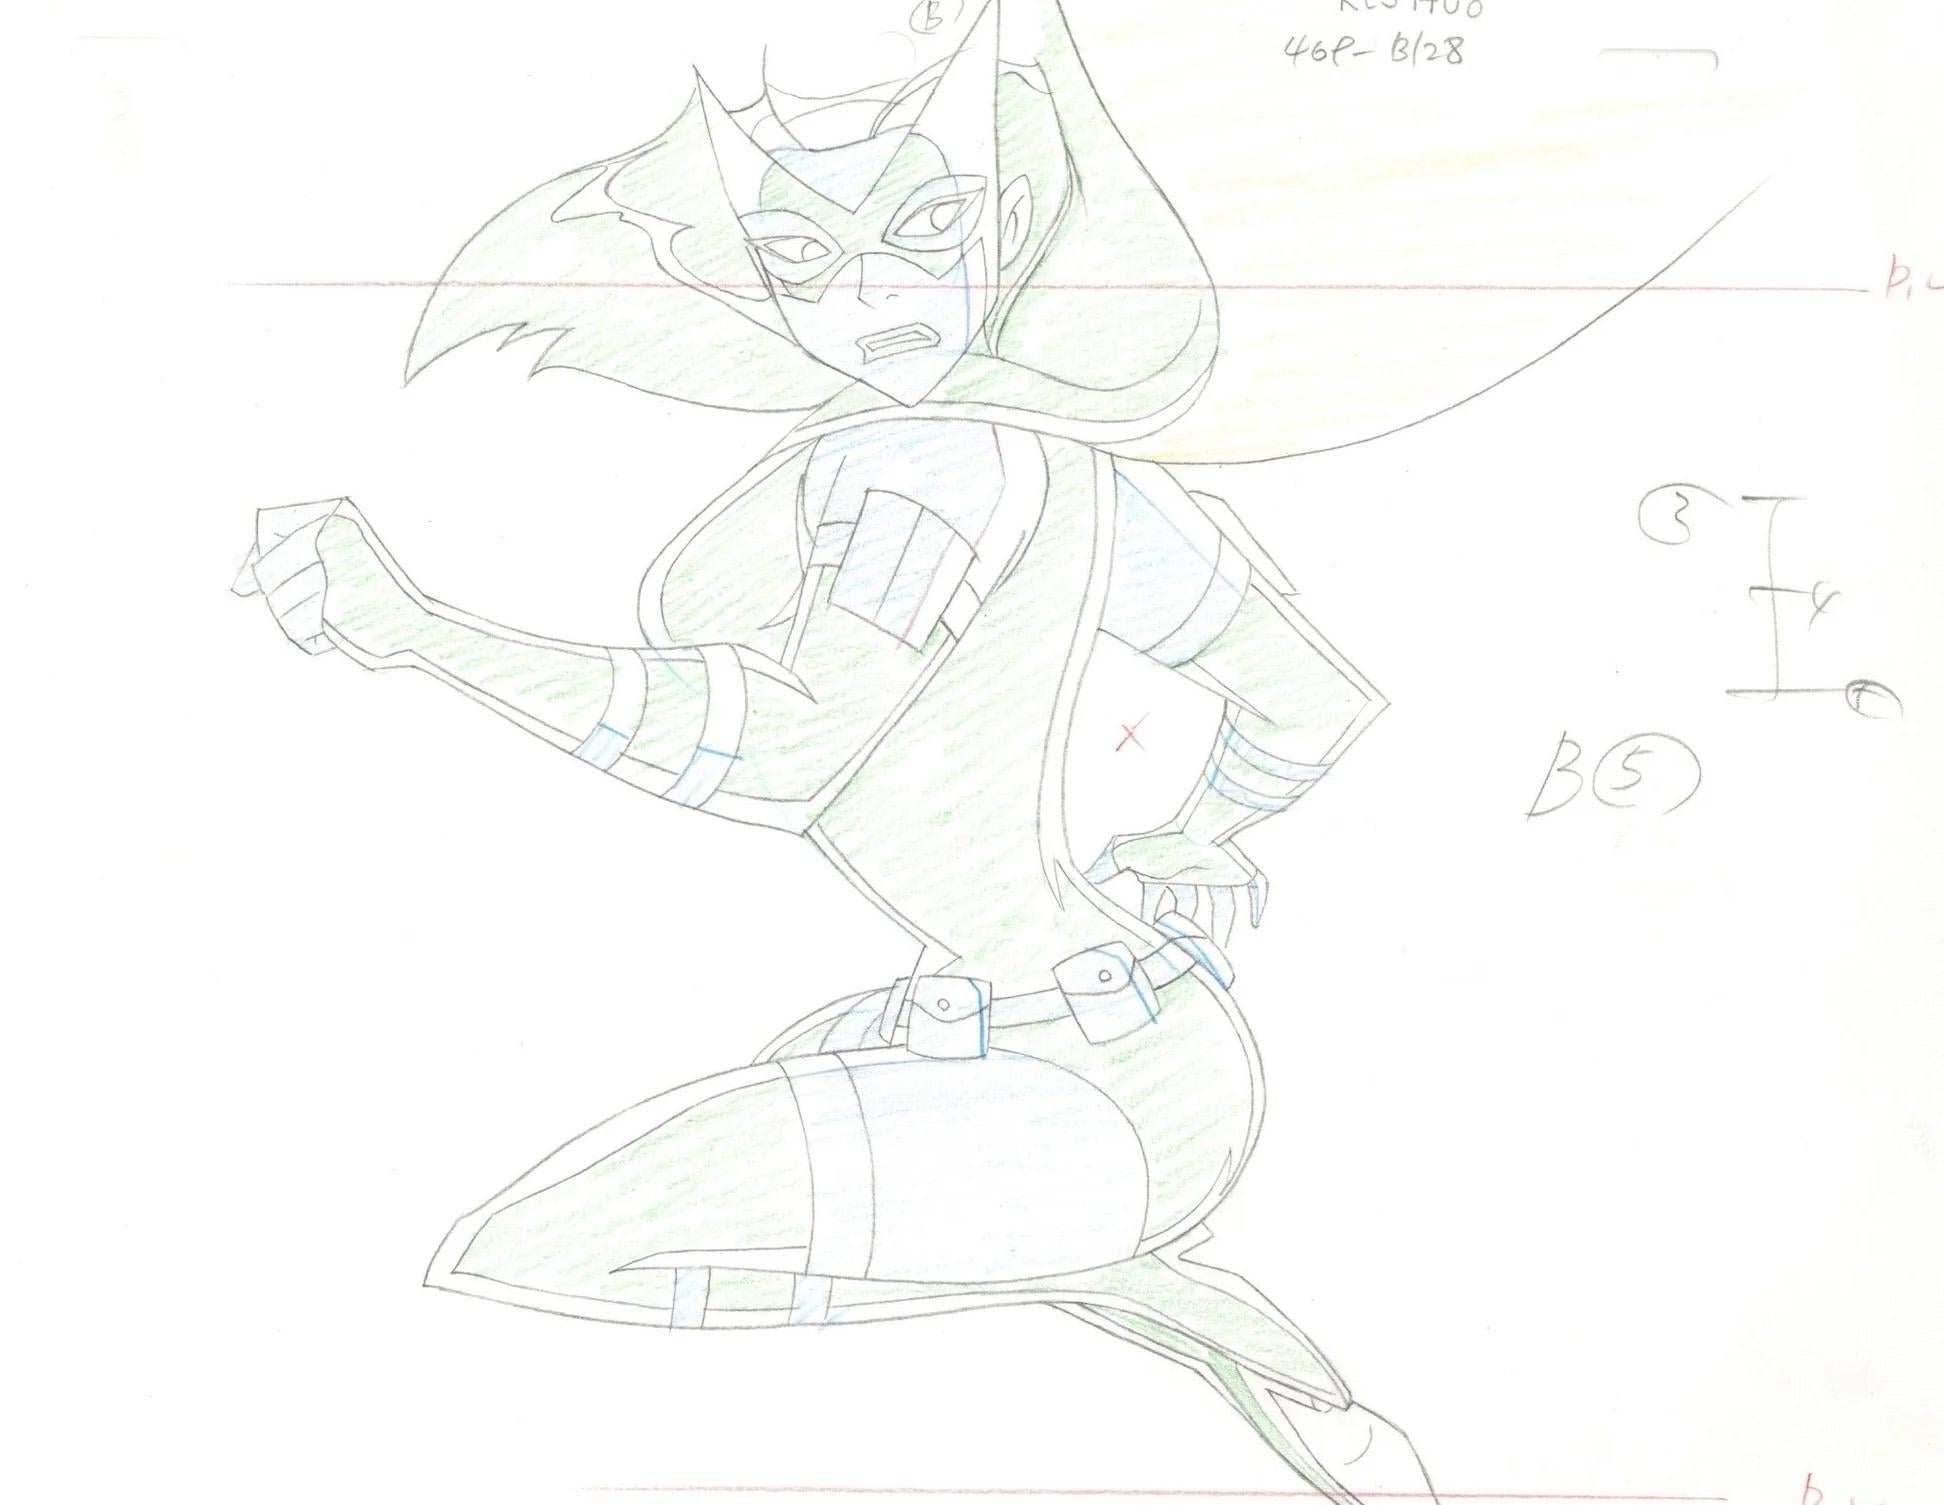 Justice League Original Production Drawing: Huntress - Art by Warner Bros. Studio Artists